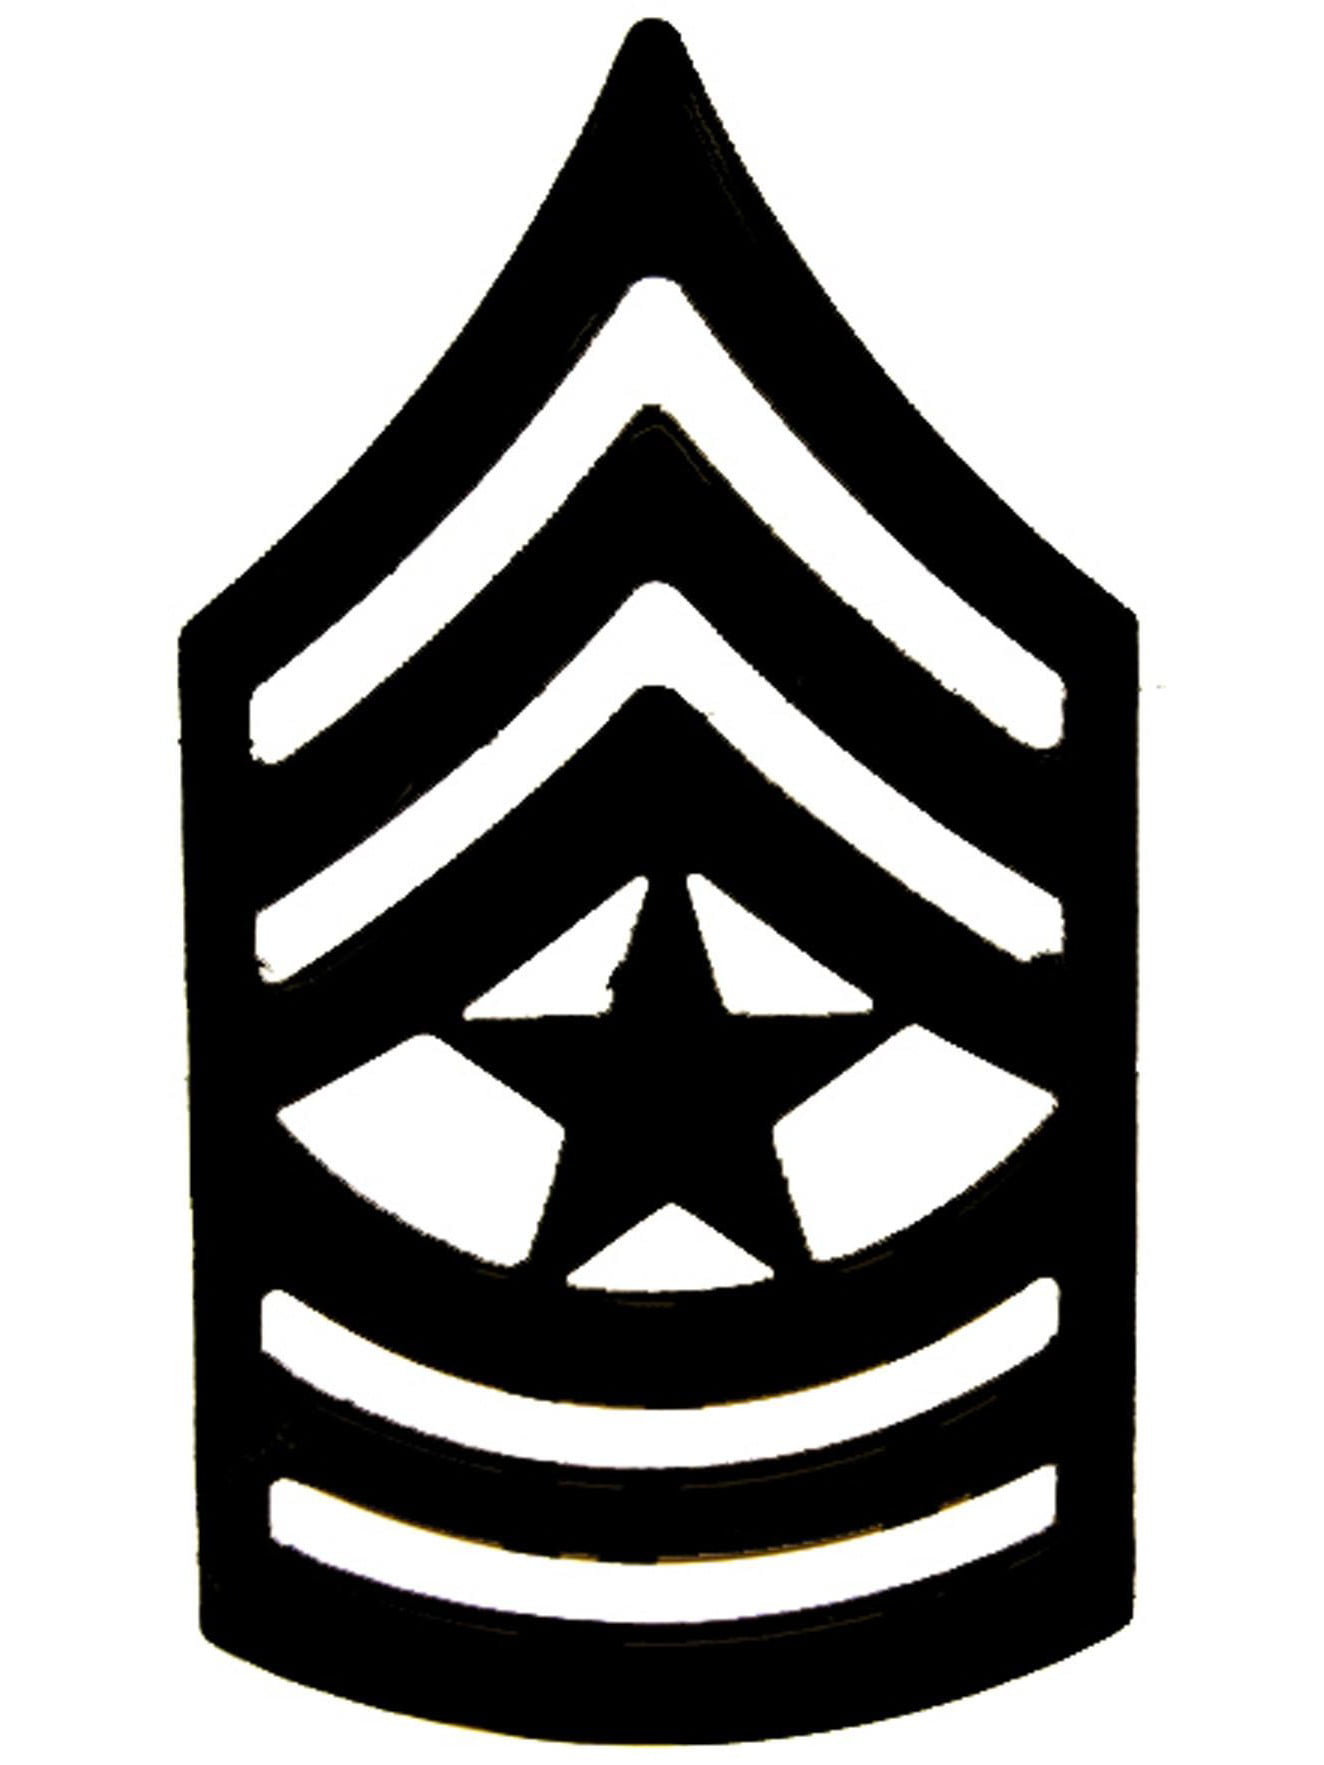 U.S. Army E9 Staff Sergeant Major Pin Subdued 1